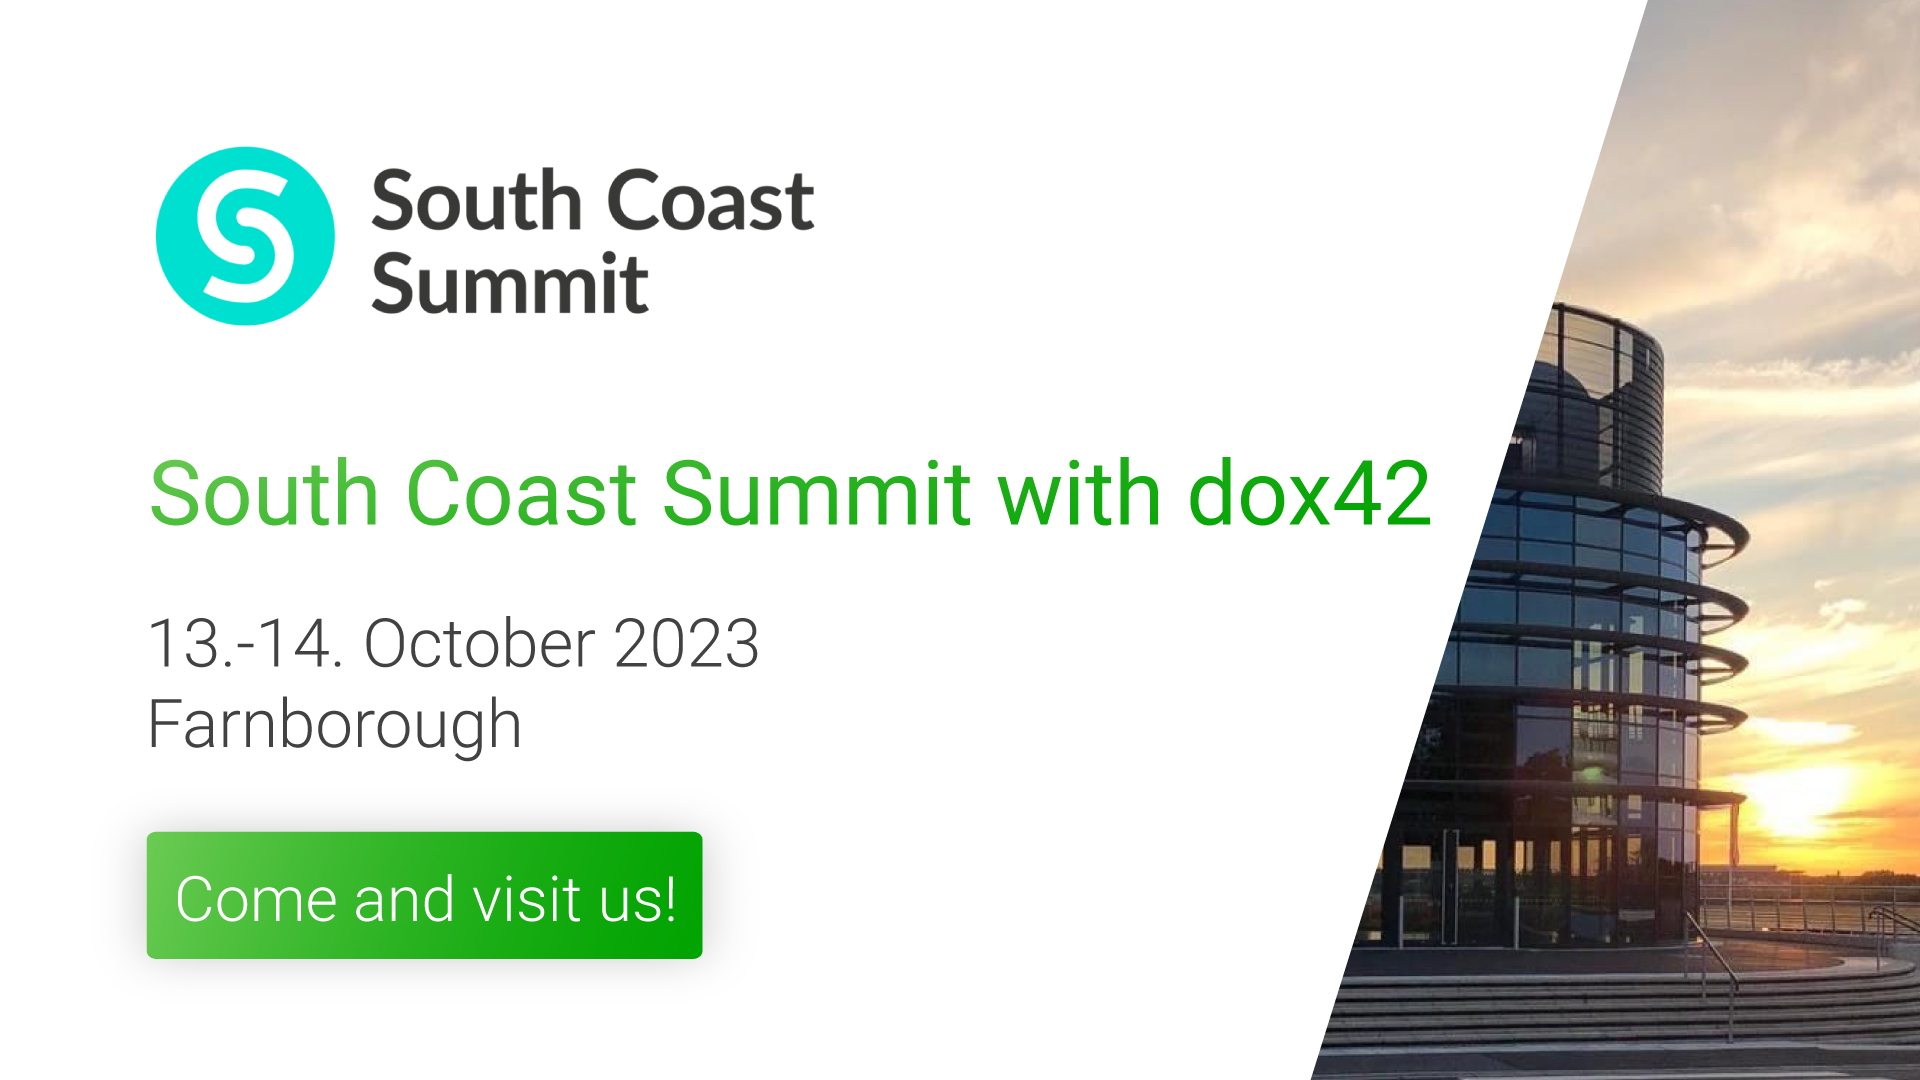 South Coast Summit with dox42